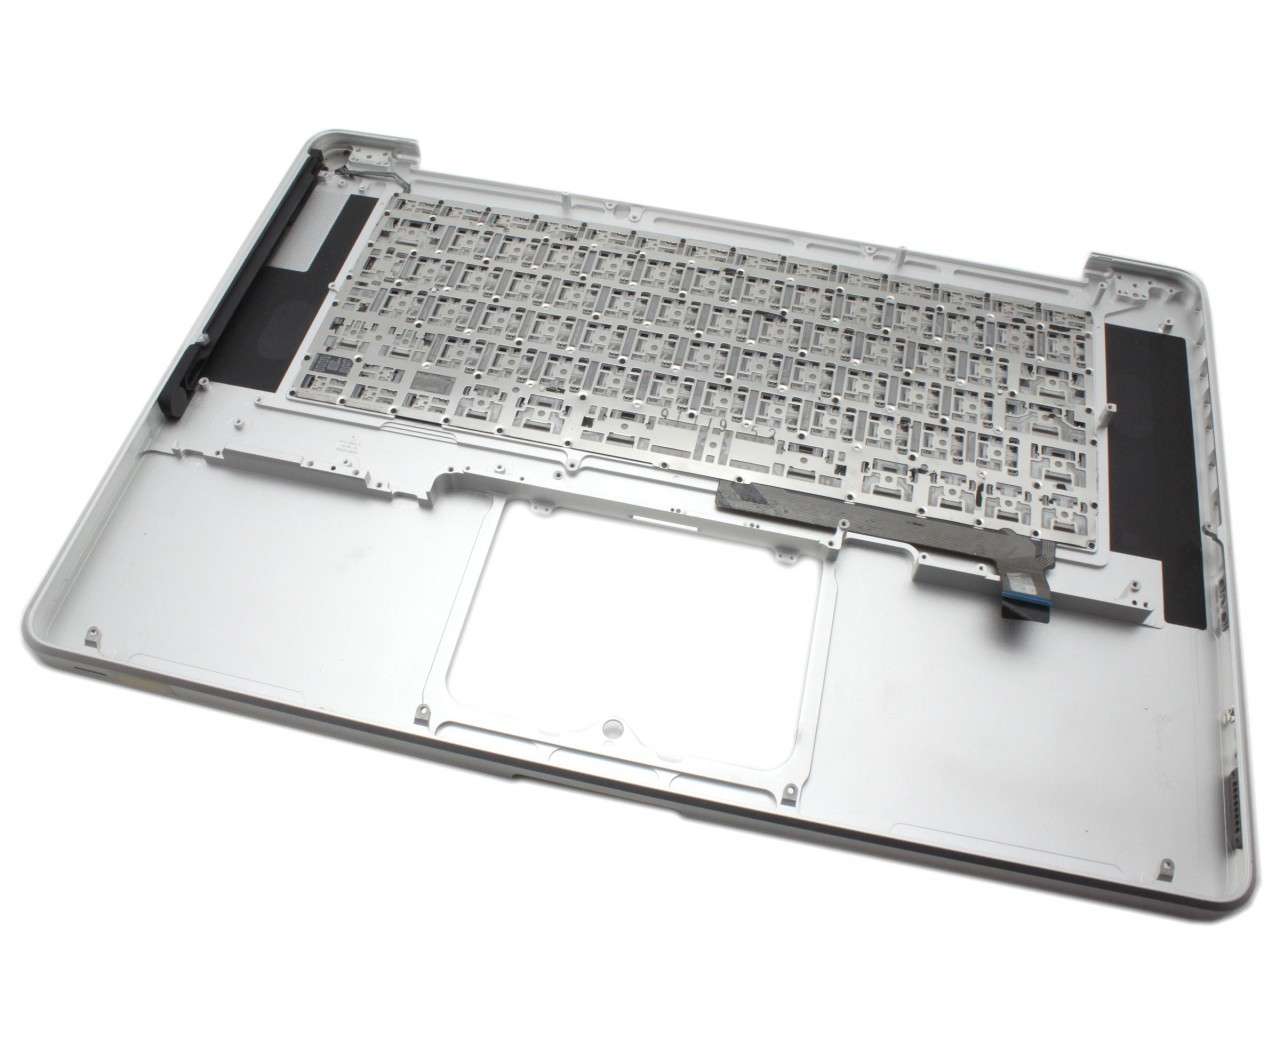 Tastatura Apple MacBook Pro 15 MD035 Neagra cu Palmrest Argintiu Refurbished Apple Apple